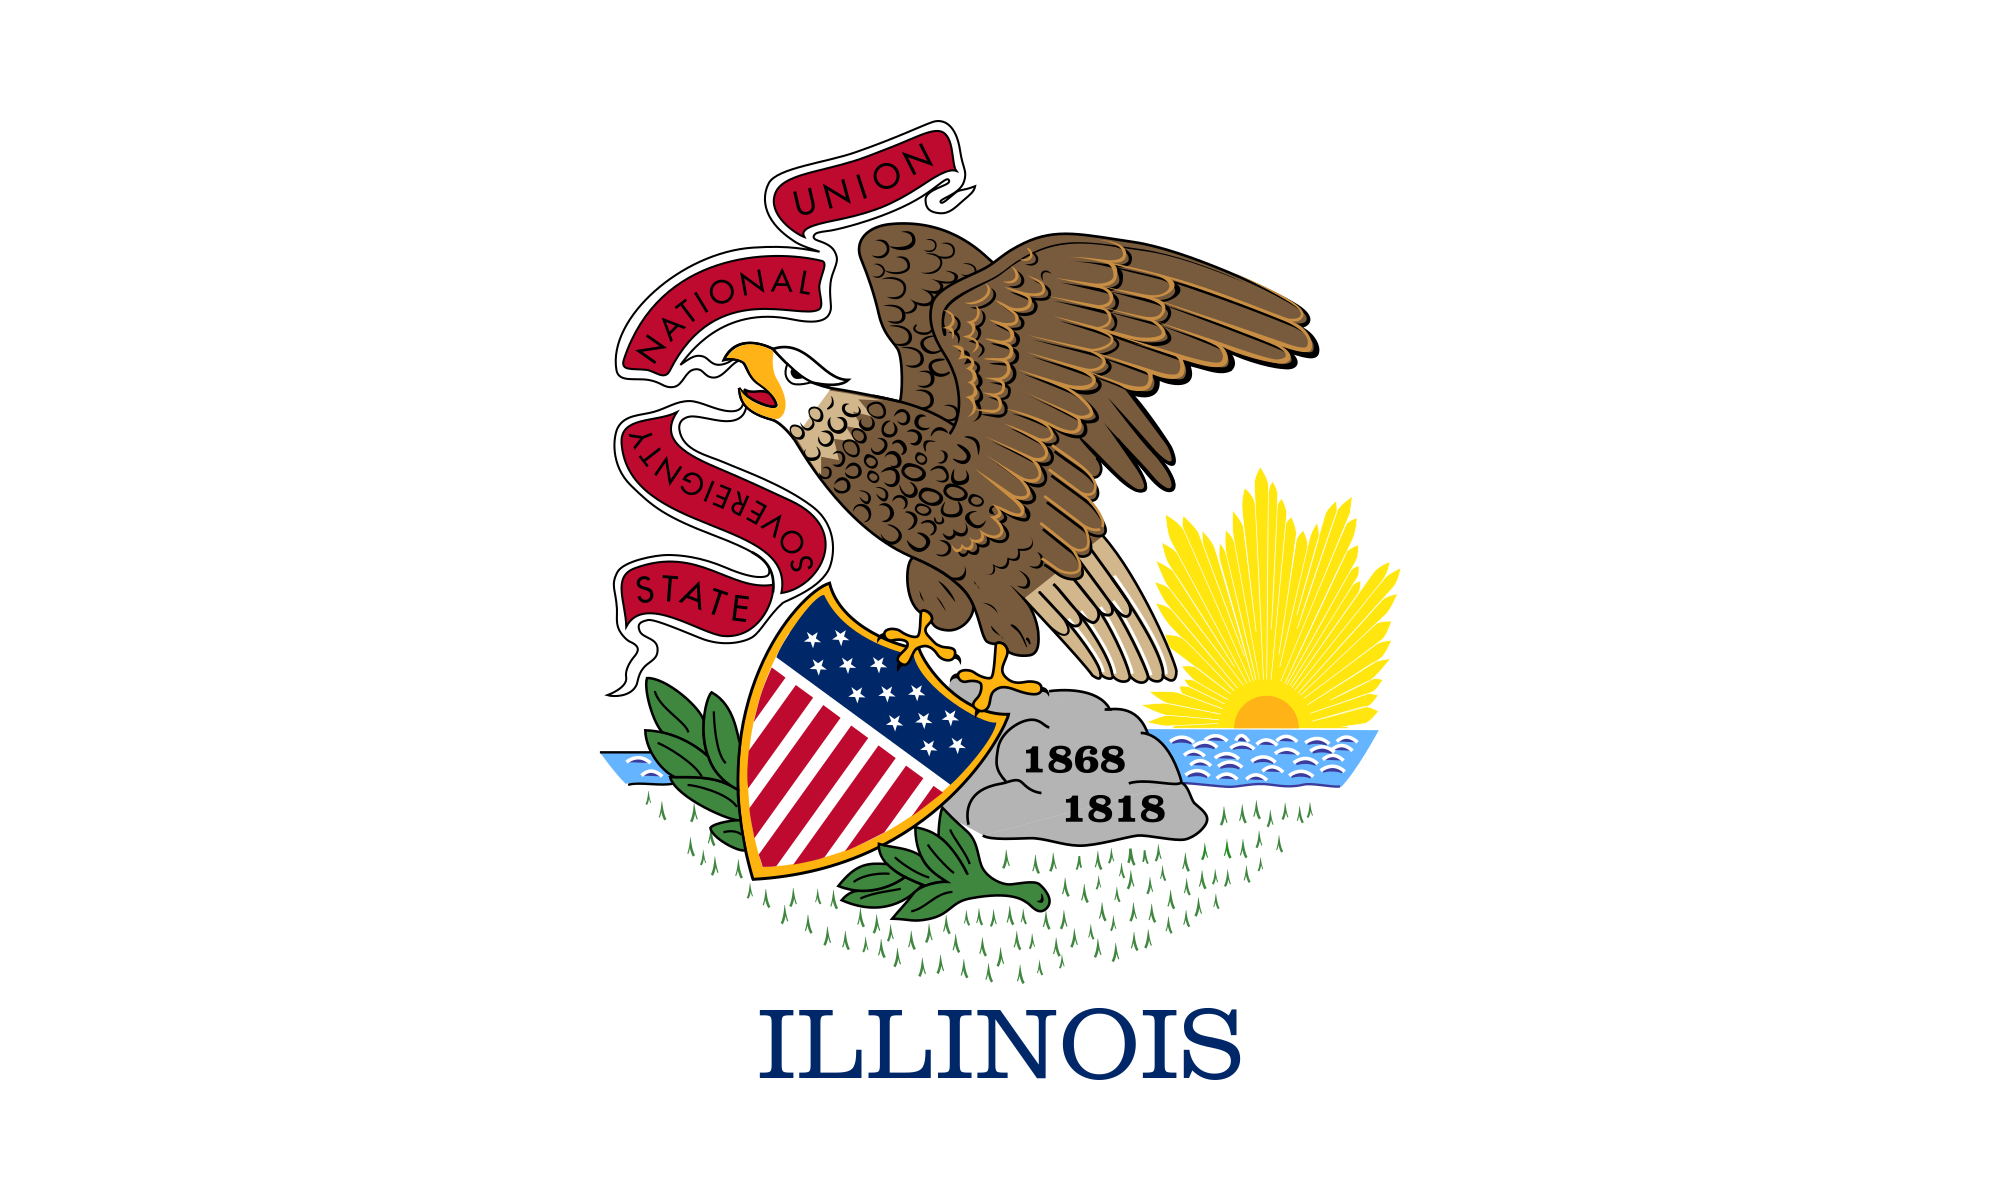 Outline of Illinois - Wikipedia